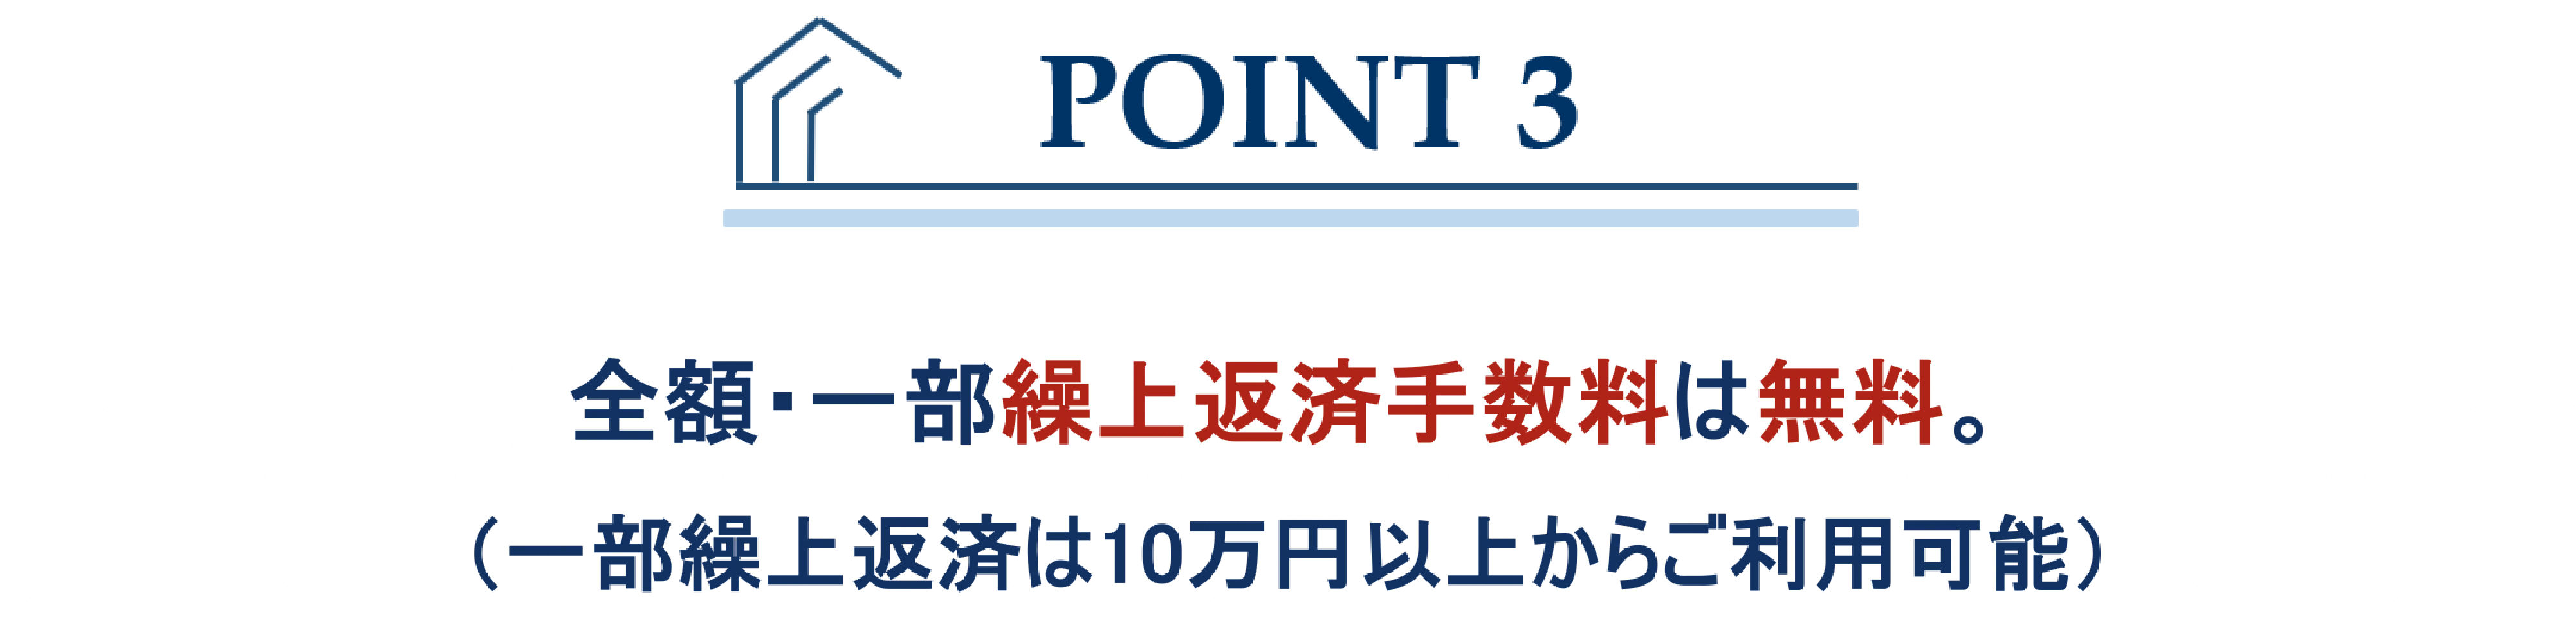 POINT3 全額・一部繰上返済手数料は無料。（一部繰上返済は10万円以上からゴチよう可能）